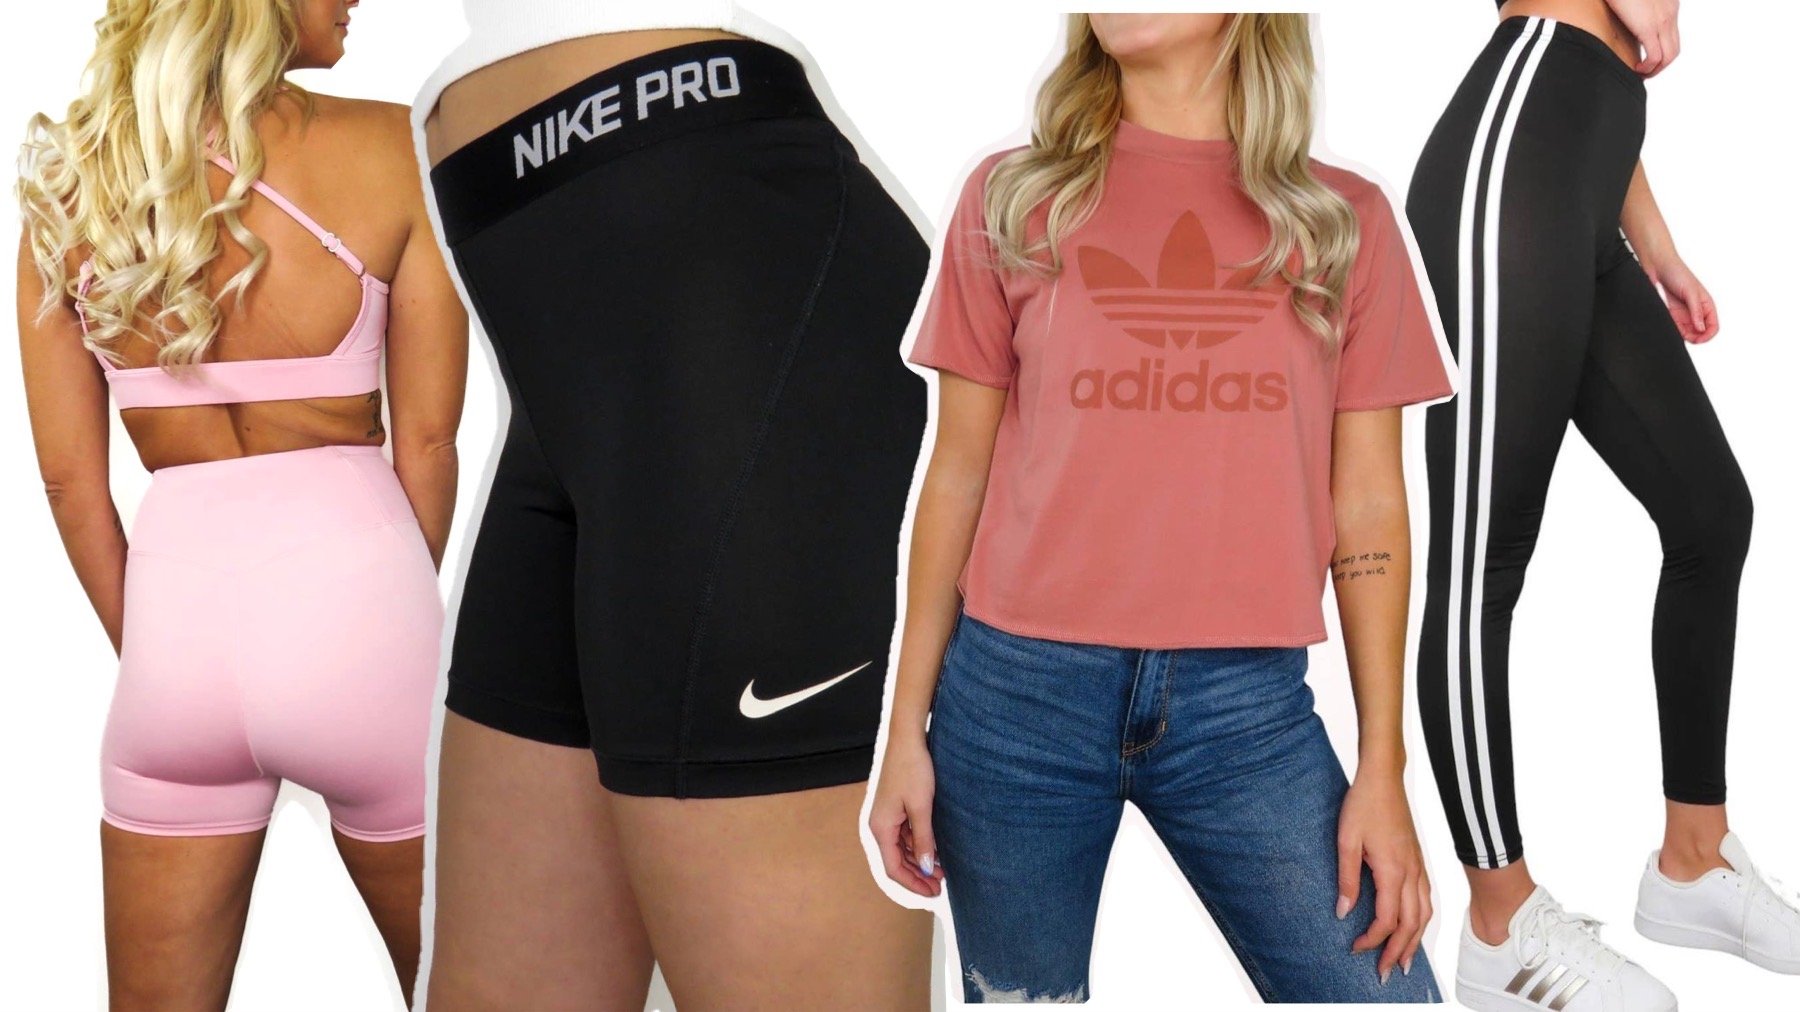 Pink and Black Plaid – Yoga Leggings – Cosplay Activewear Costumes – Spirit  West Designs